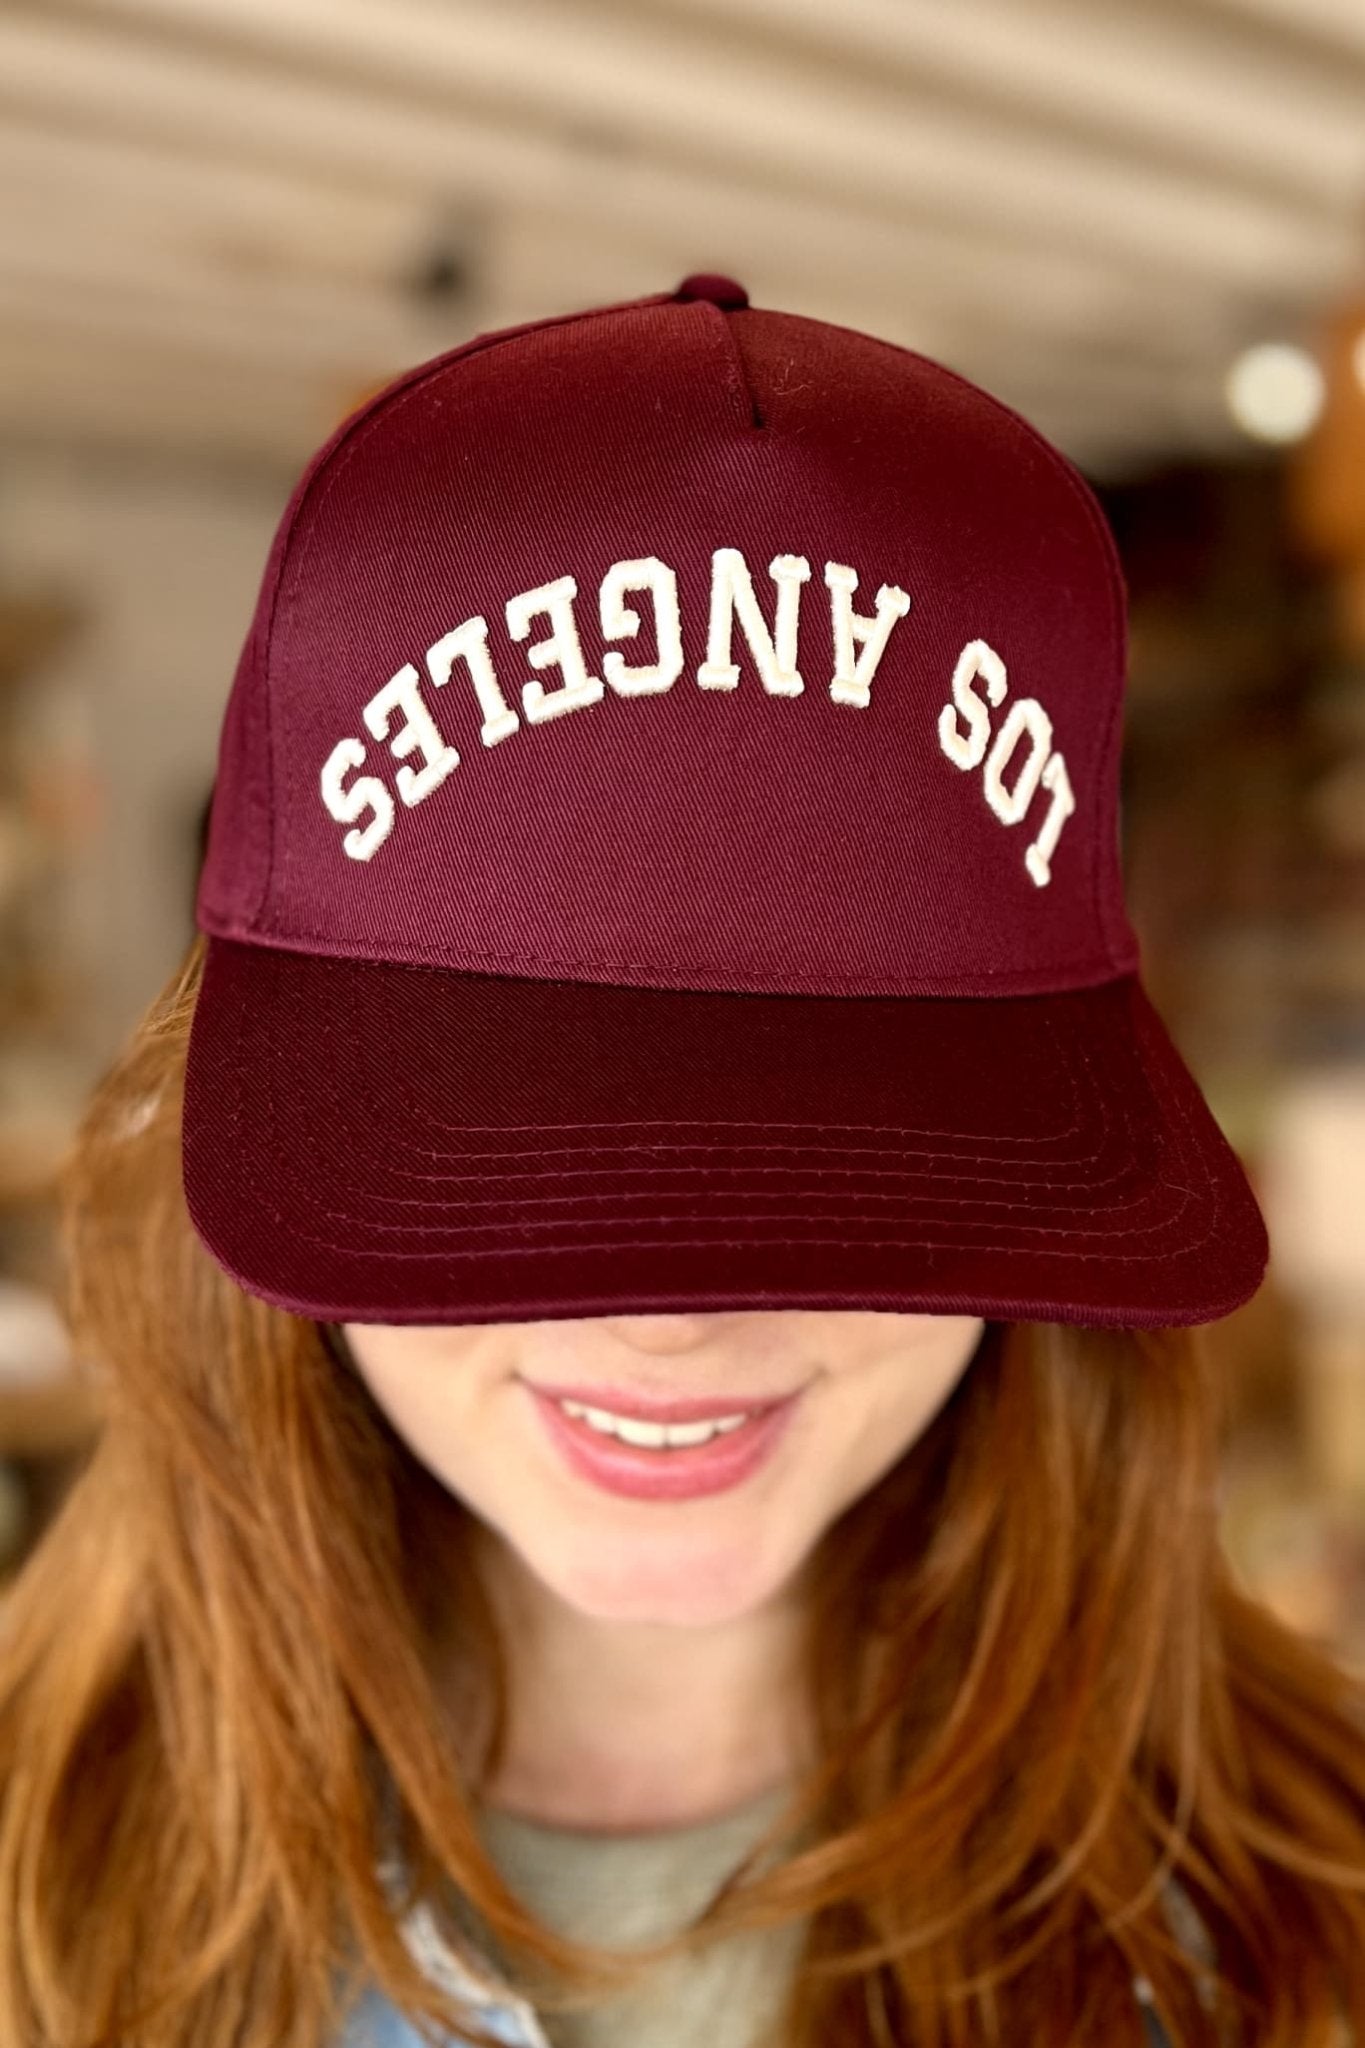 Los Angeles Rebel Baseball Cap (Burgundy) - Hat